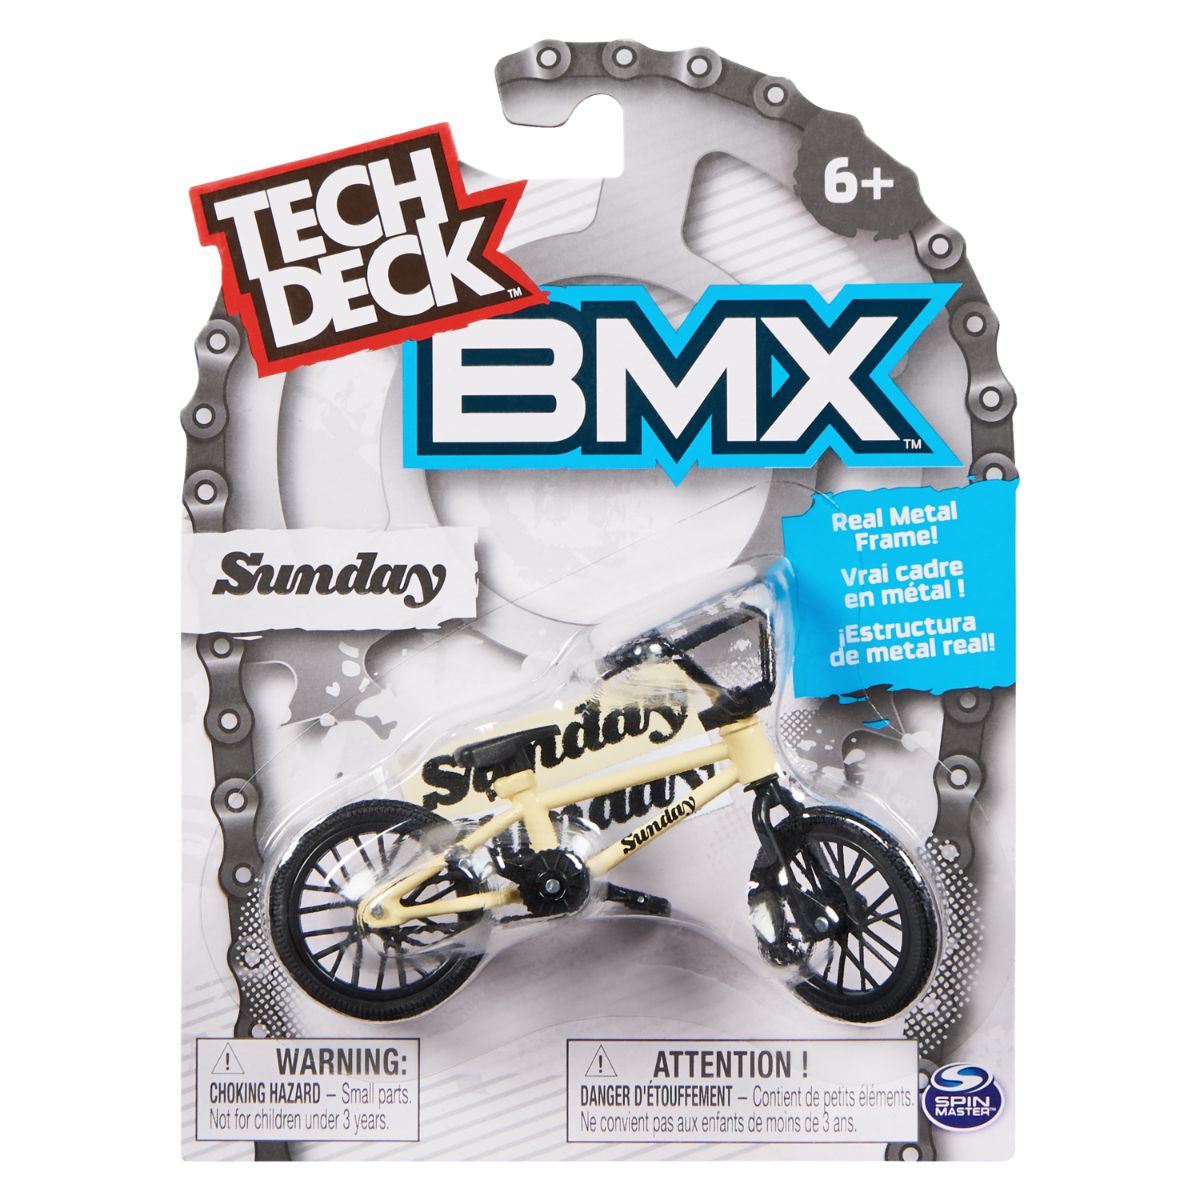 Mini BMX bike, Tech Deck, Sunday, 20140826